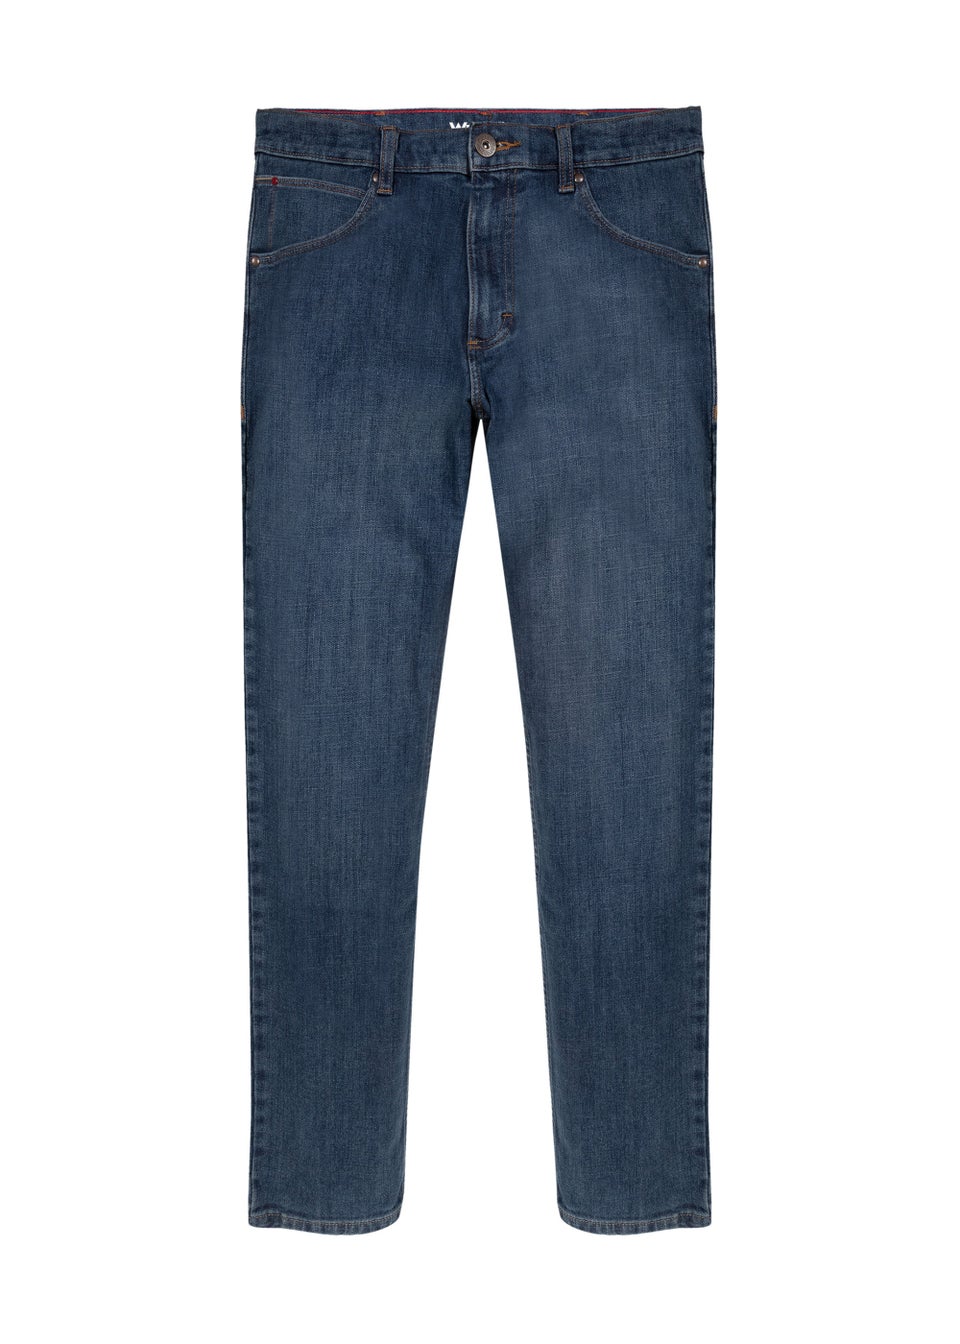 Wrangler Dark Wash Regular Fit Jeans - Matalan